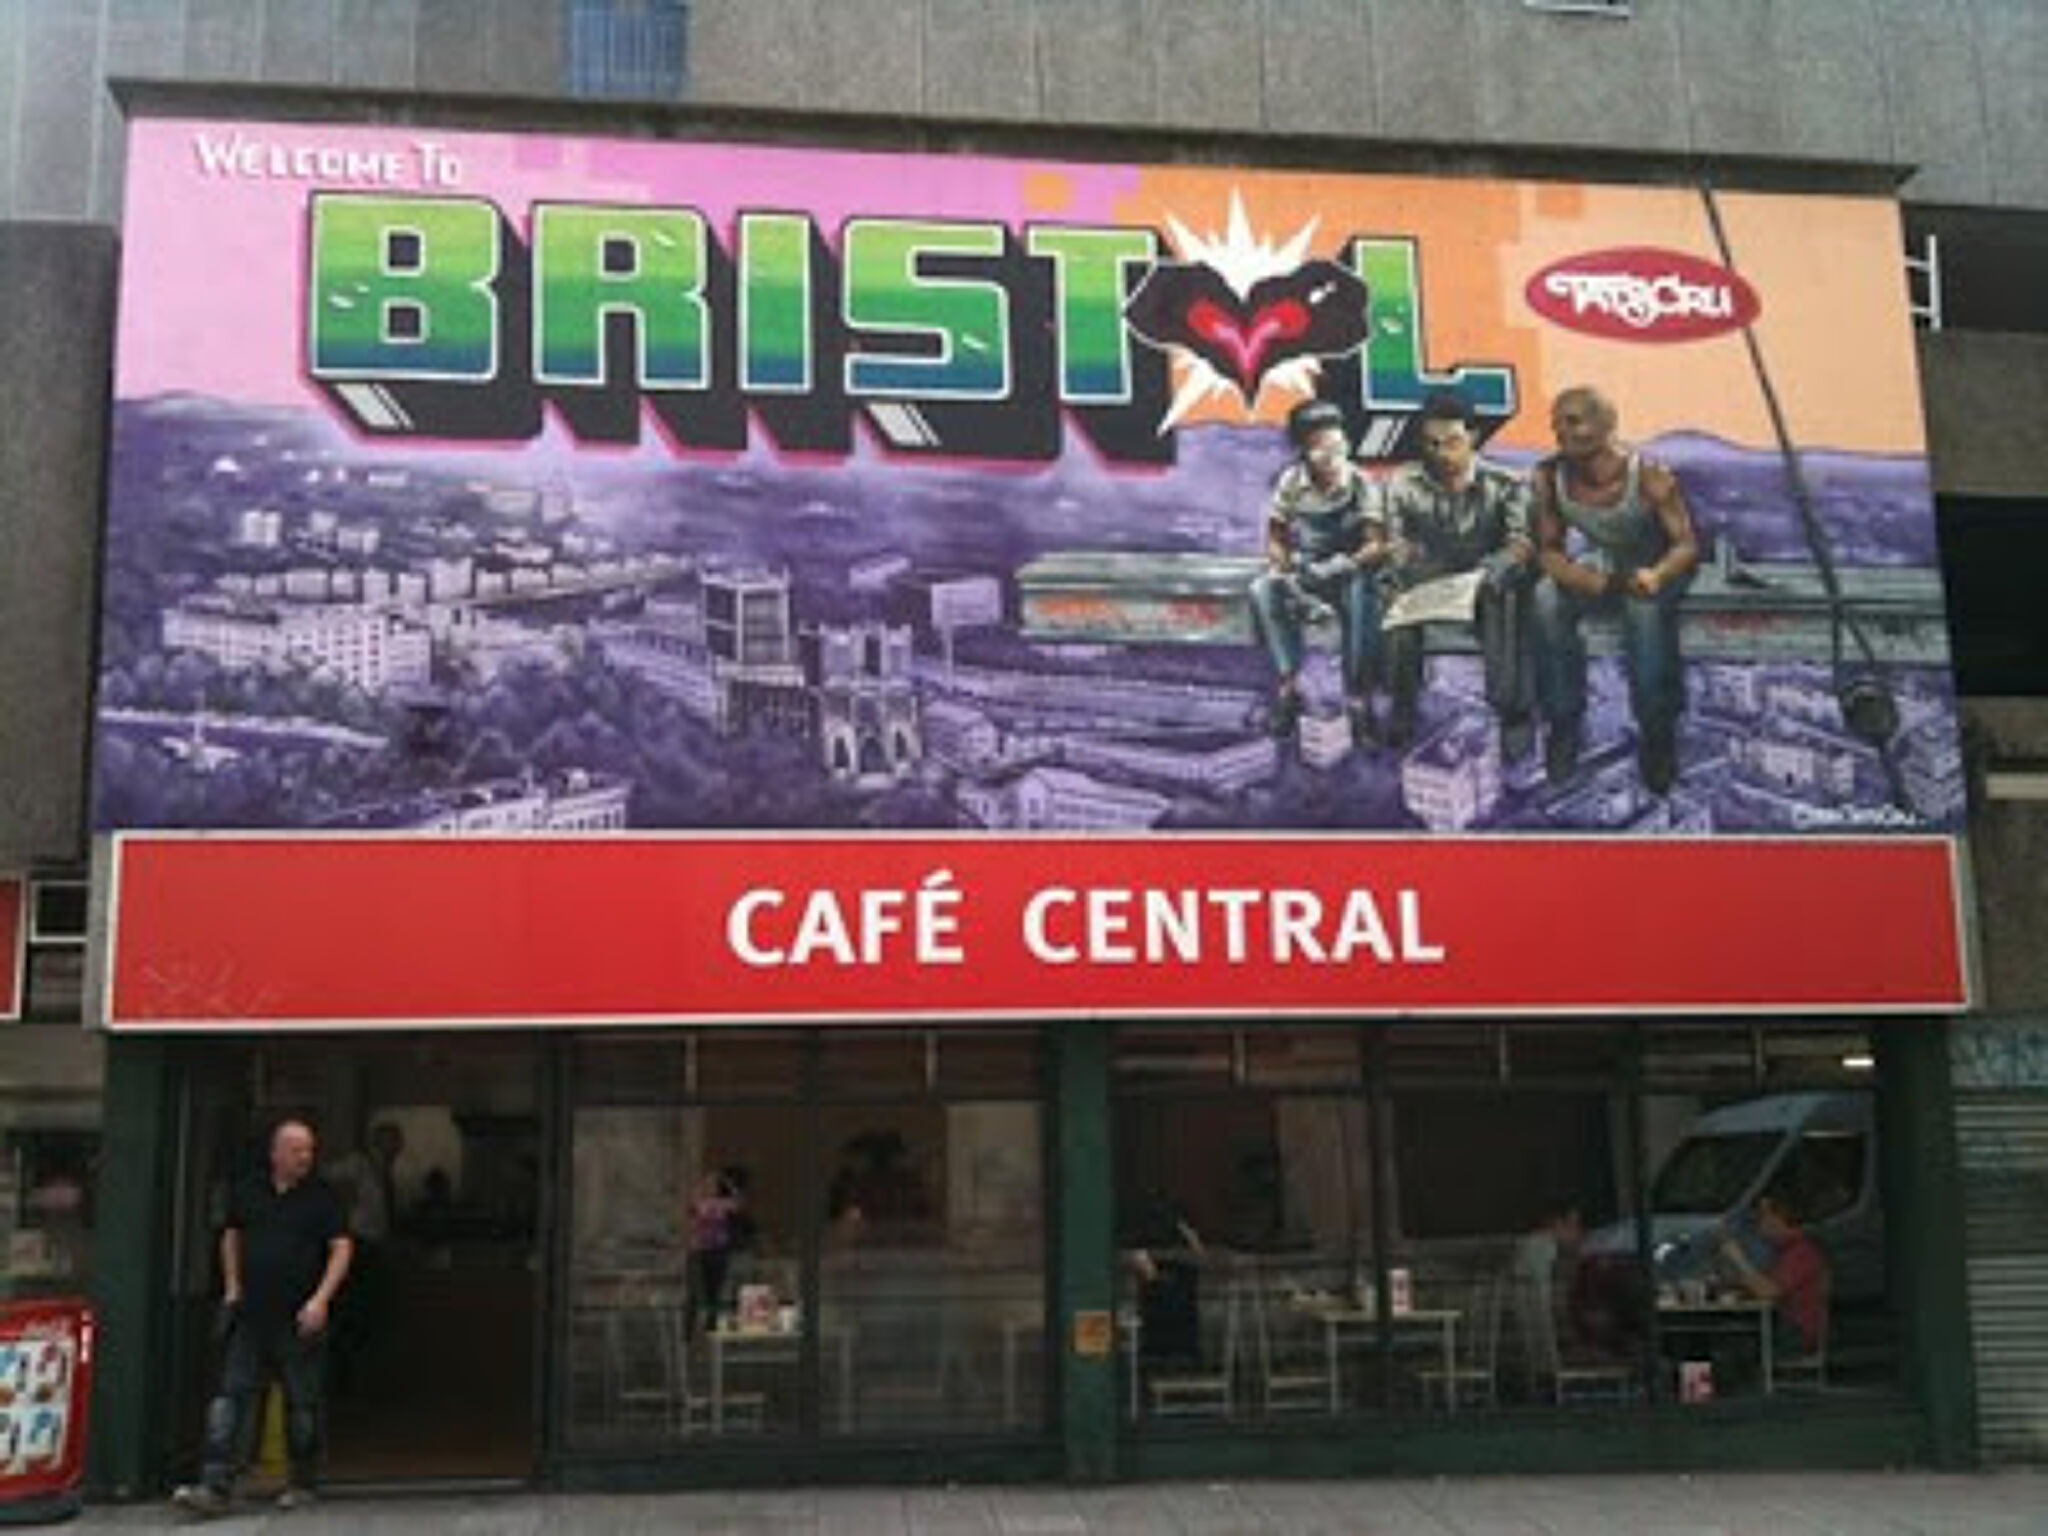 Tats Cru&mdash;Welcome to Bristol